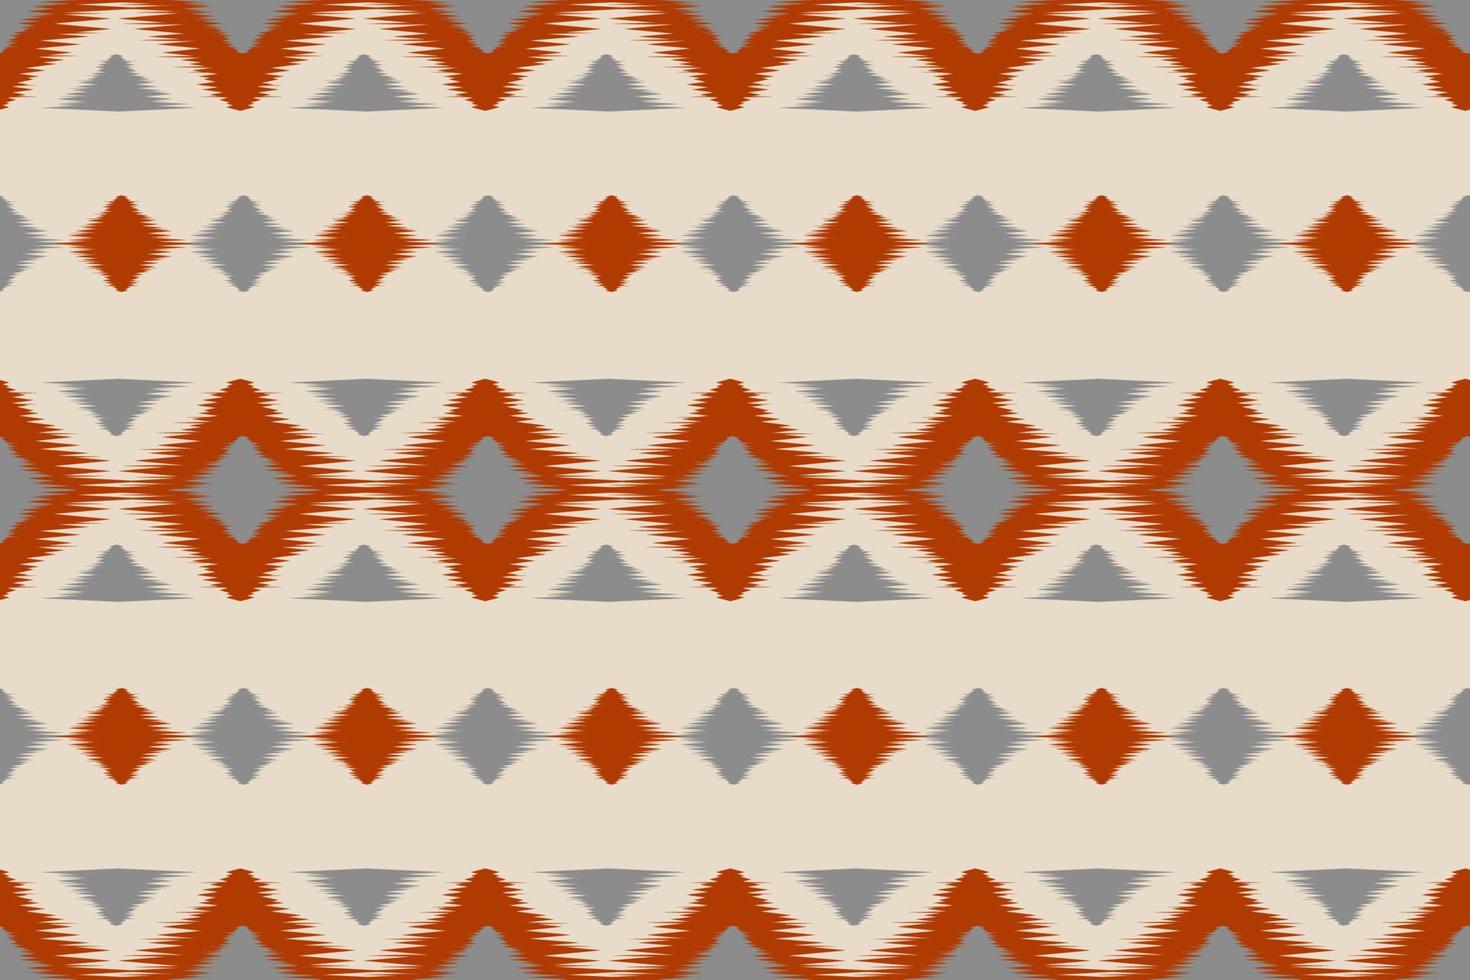 etnisk ikat sömlös mönster i stam. aztec geometrisk etnisk prydnad skriva ut. ikat mönster stil. vektor